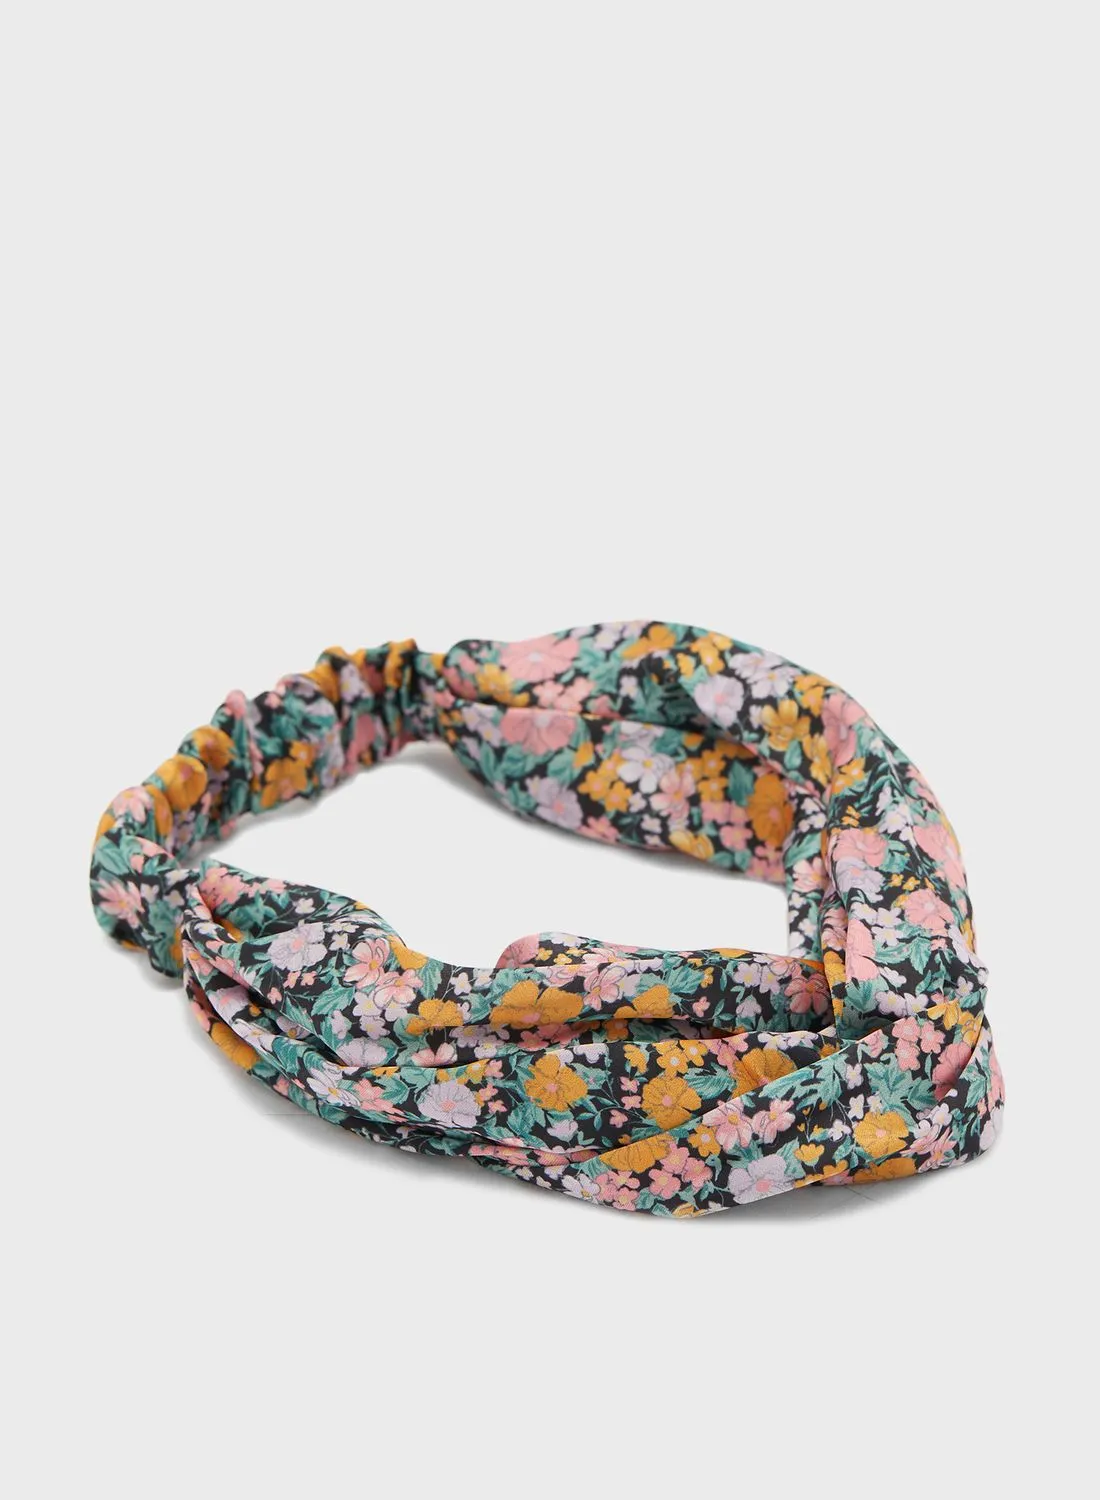 NEW LOOK Floral Printed Headband